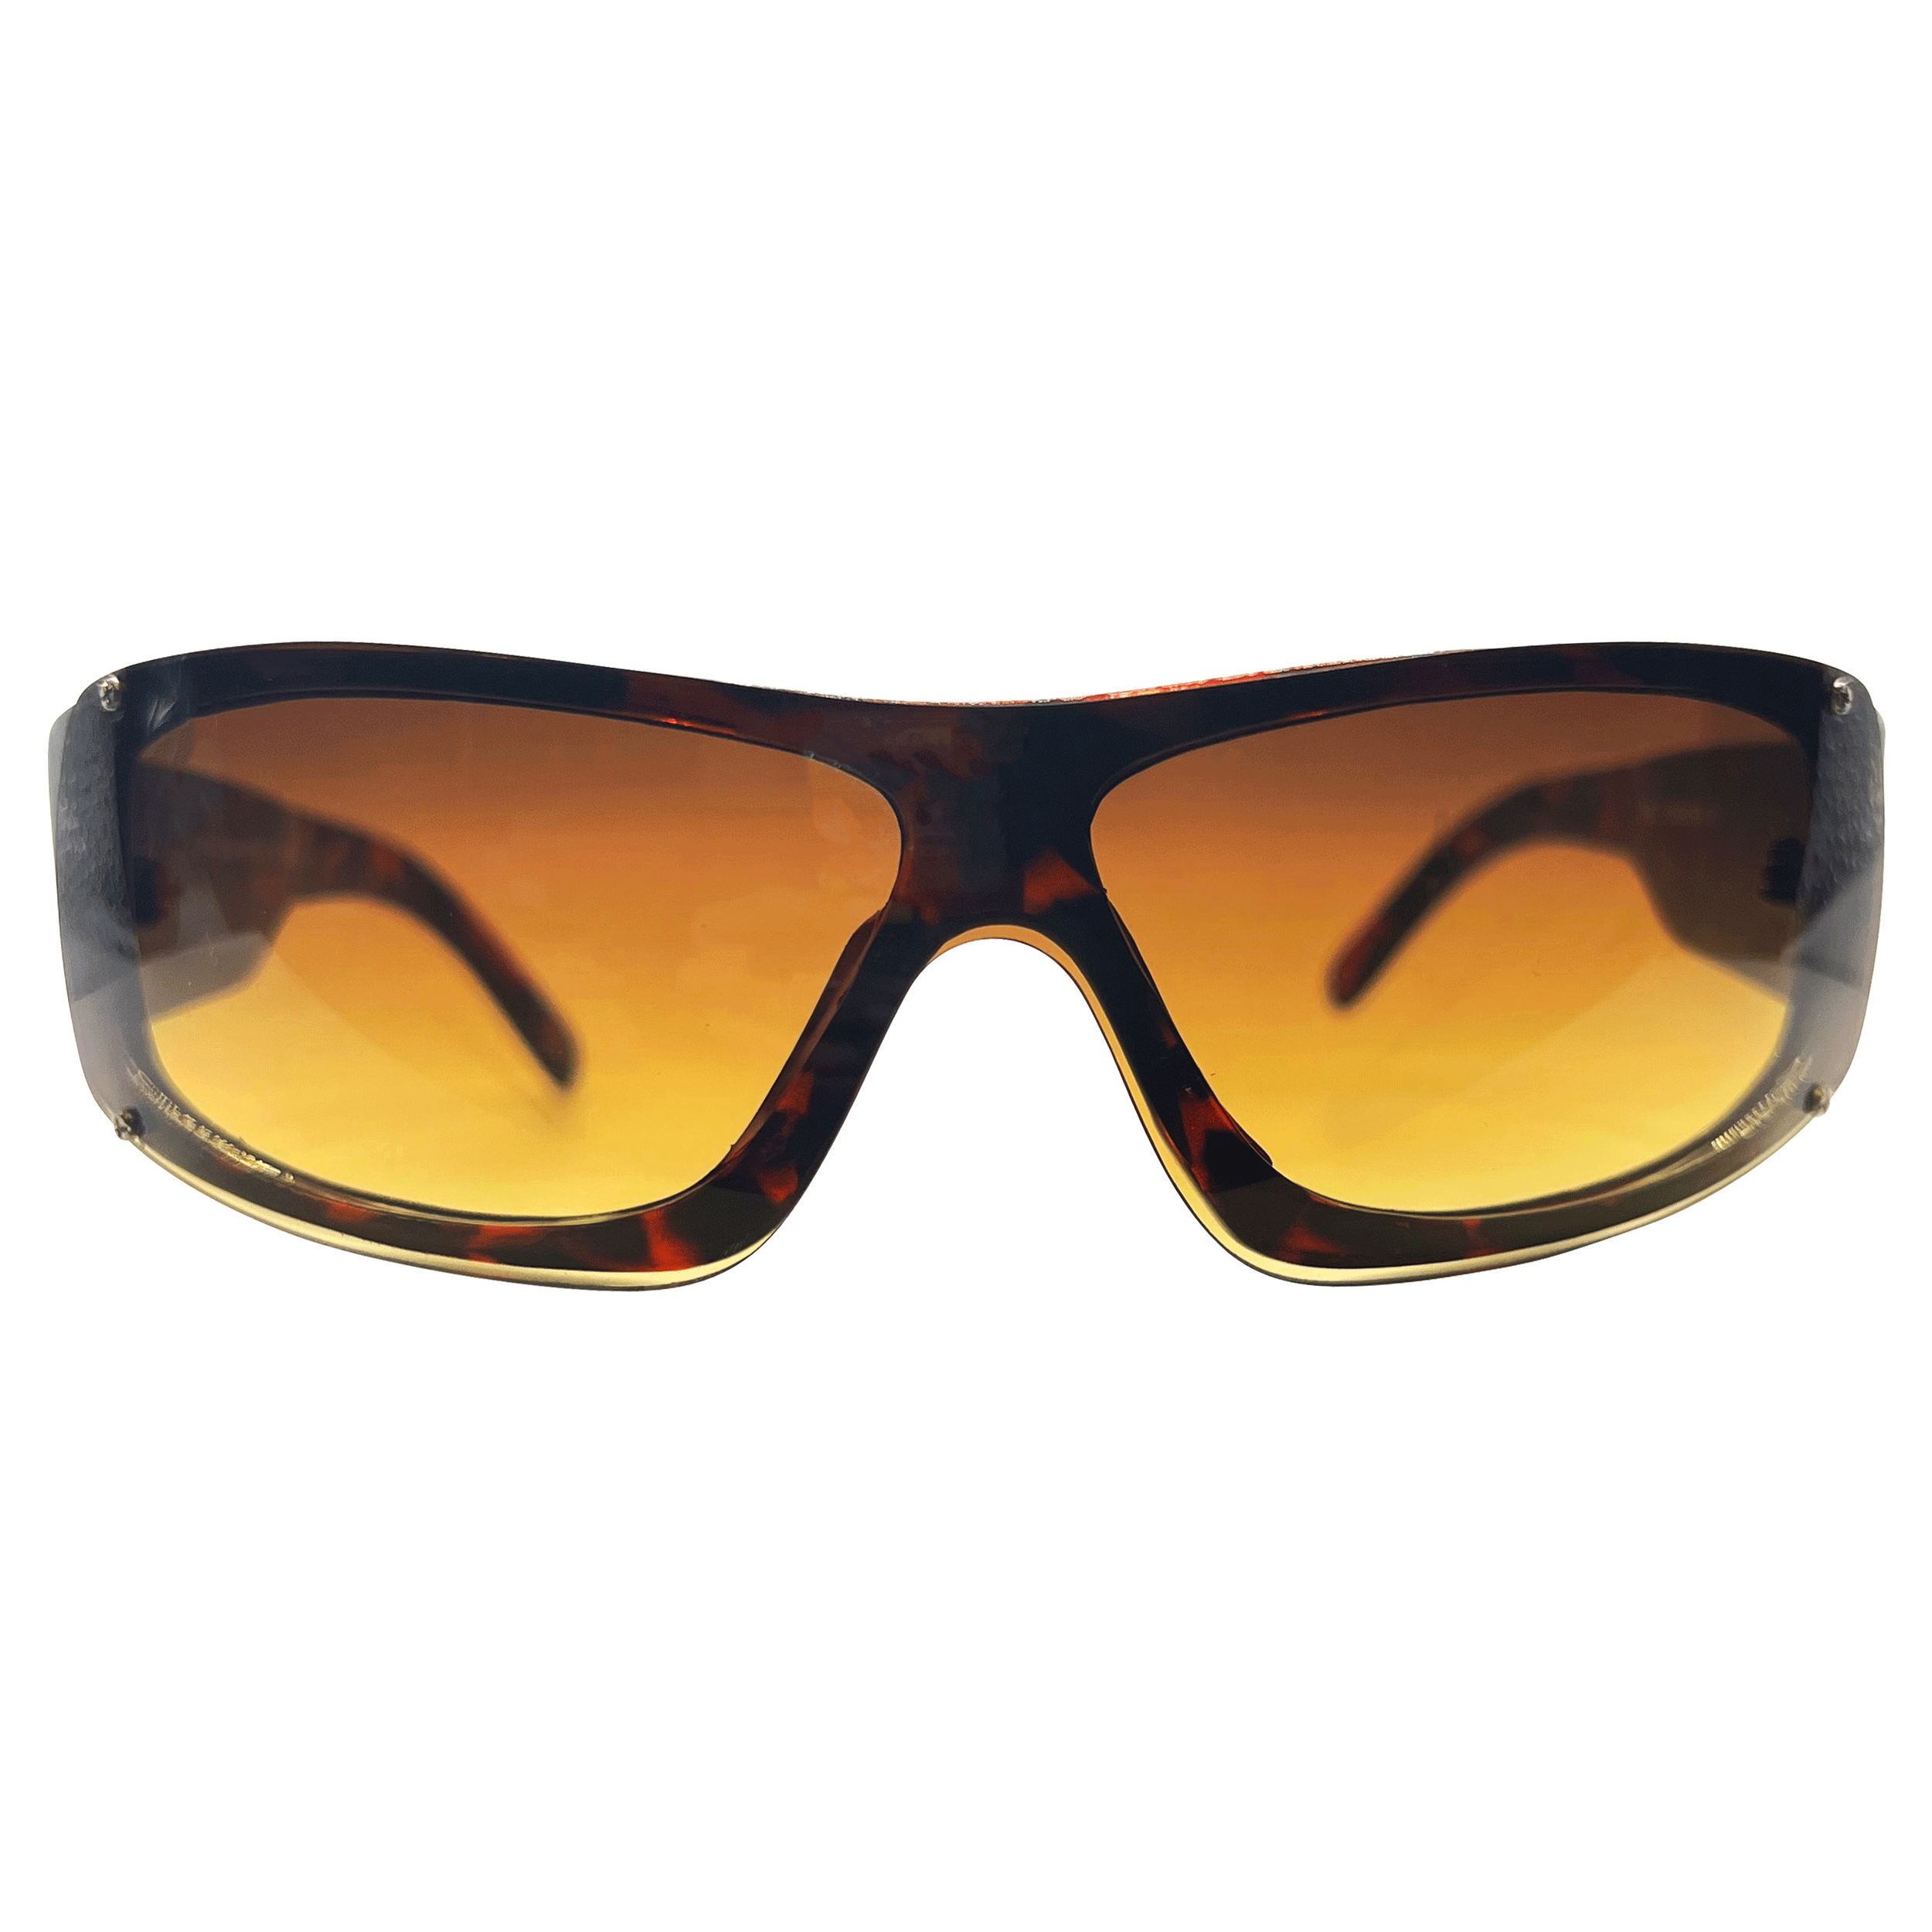 GONZALEZ Tortoise/Amber Sports Sunglasses